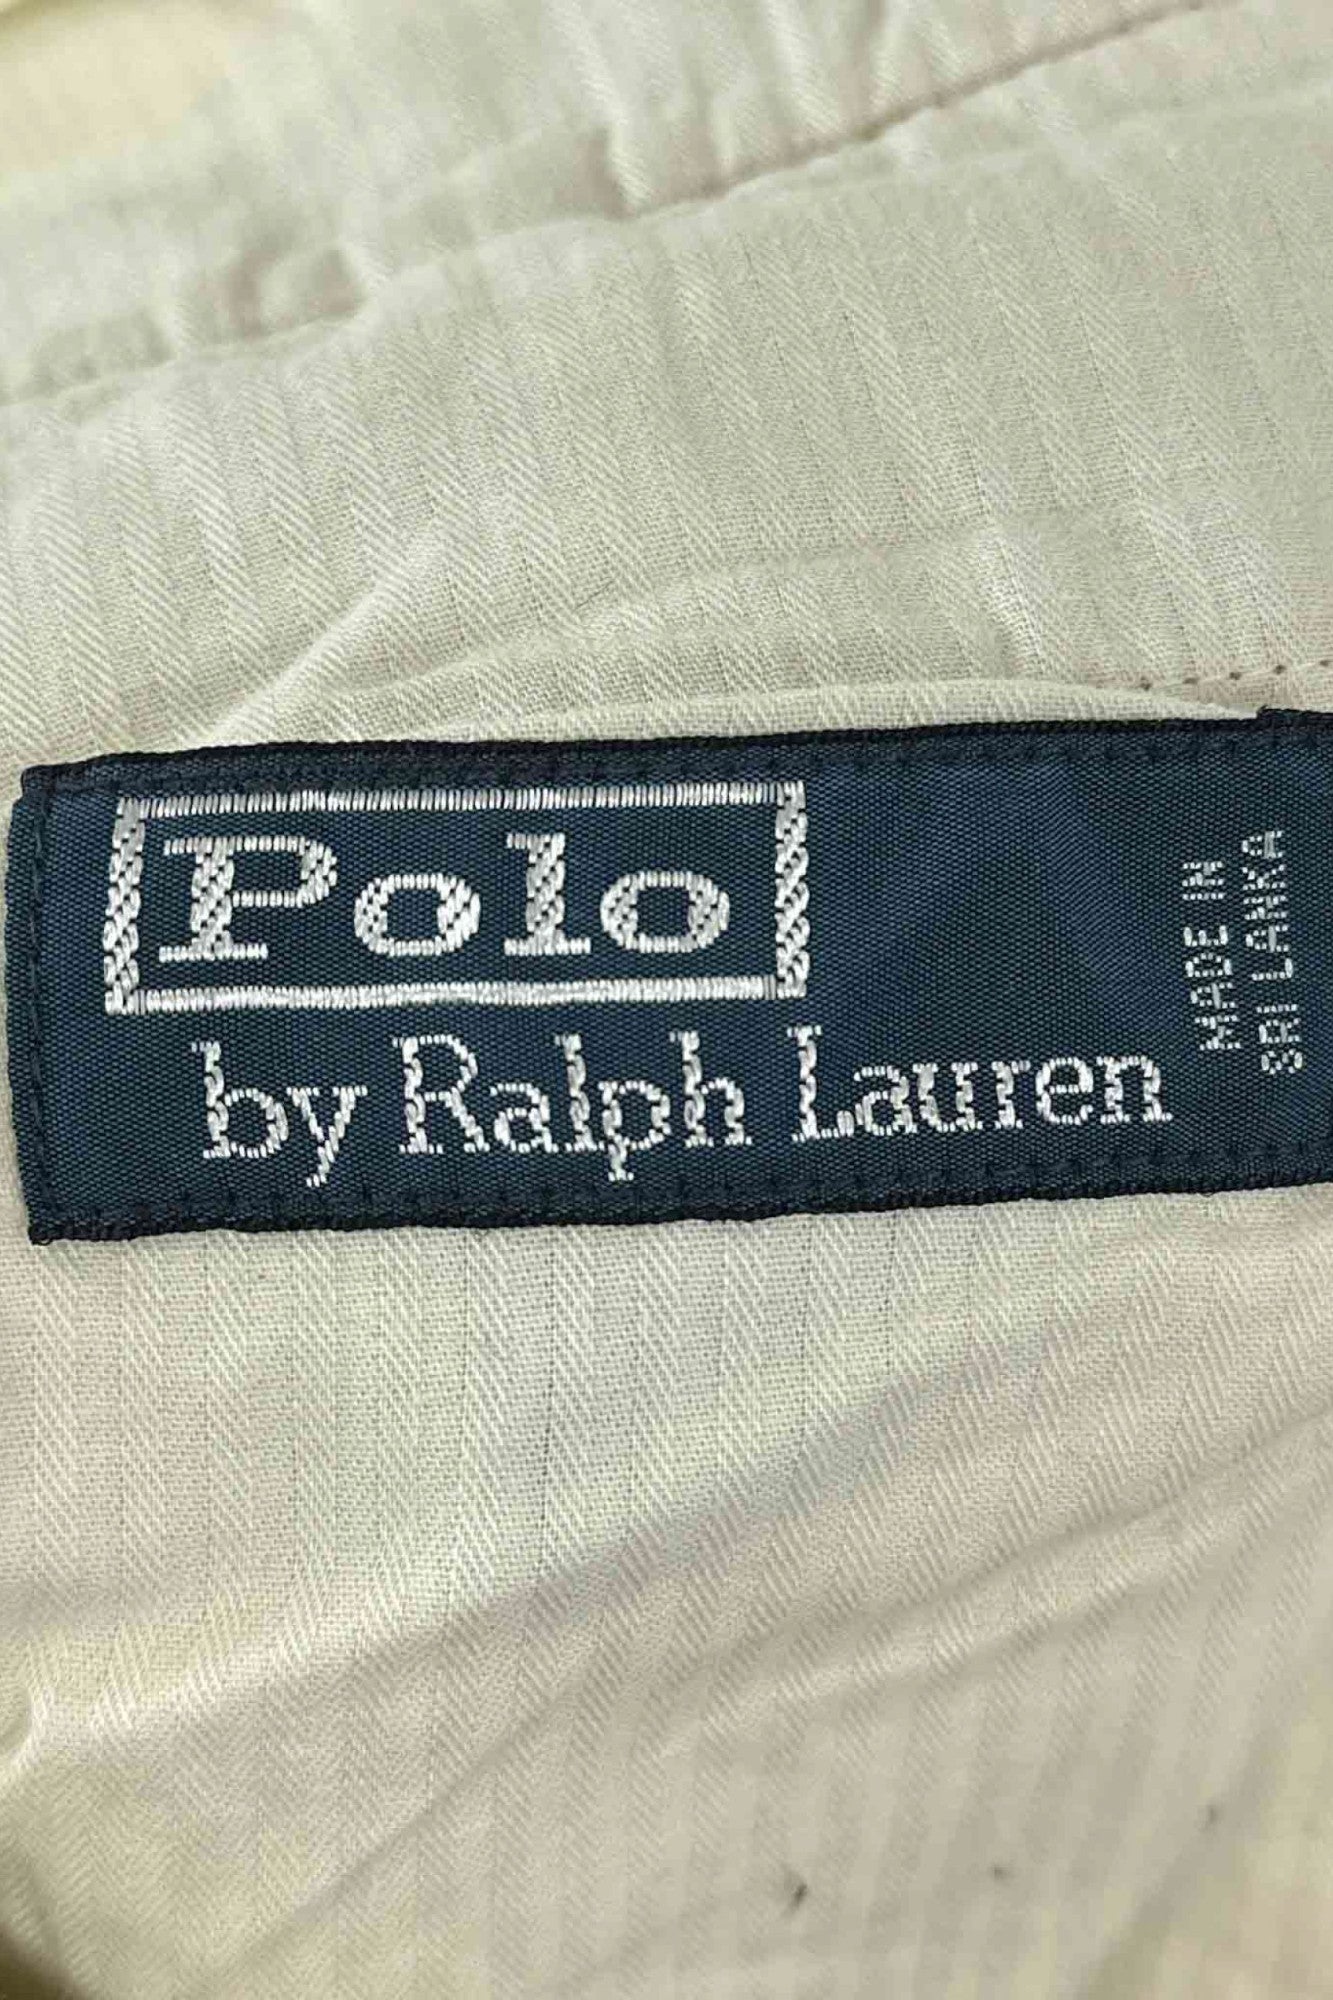 90 年代 Polo by Ralph Lauren 棕色灯芯绒长裤